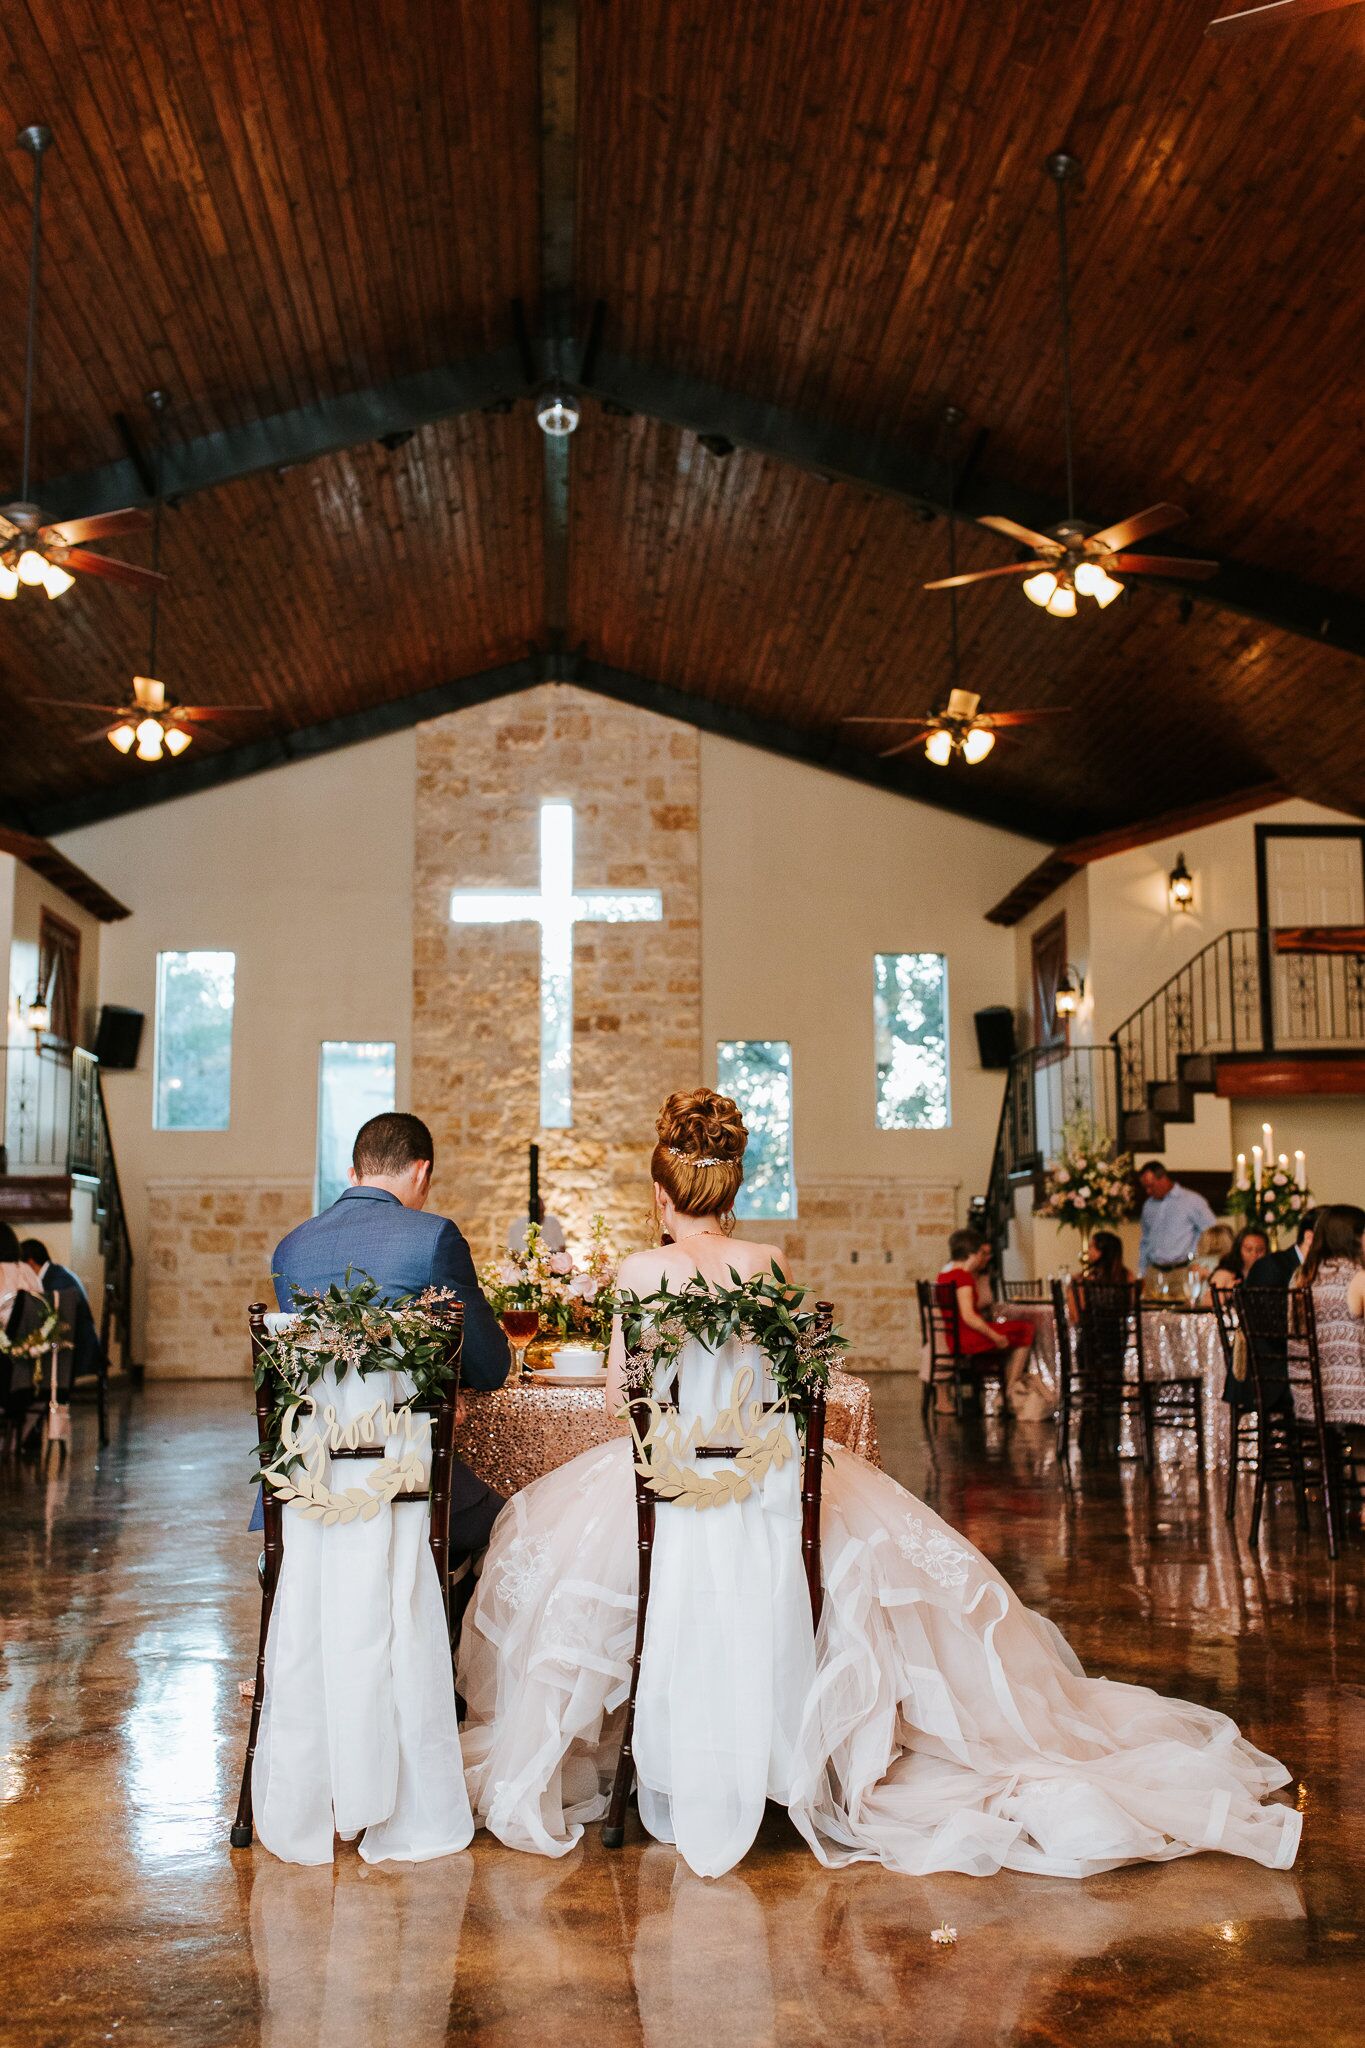  Wedding  Venues  in Boerne TX The Knot  in 2019 wedding  ideas